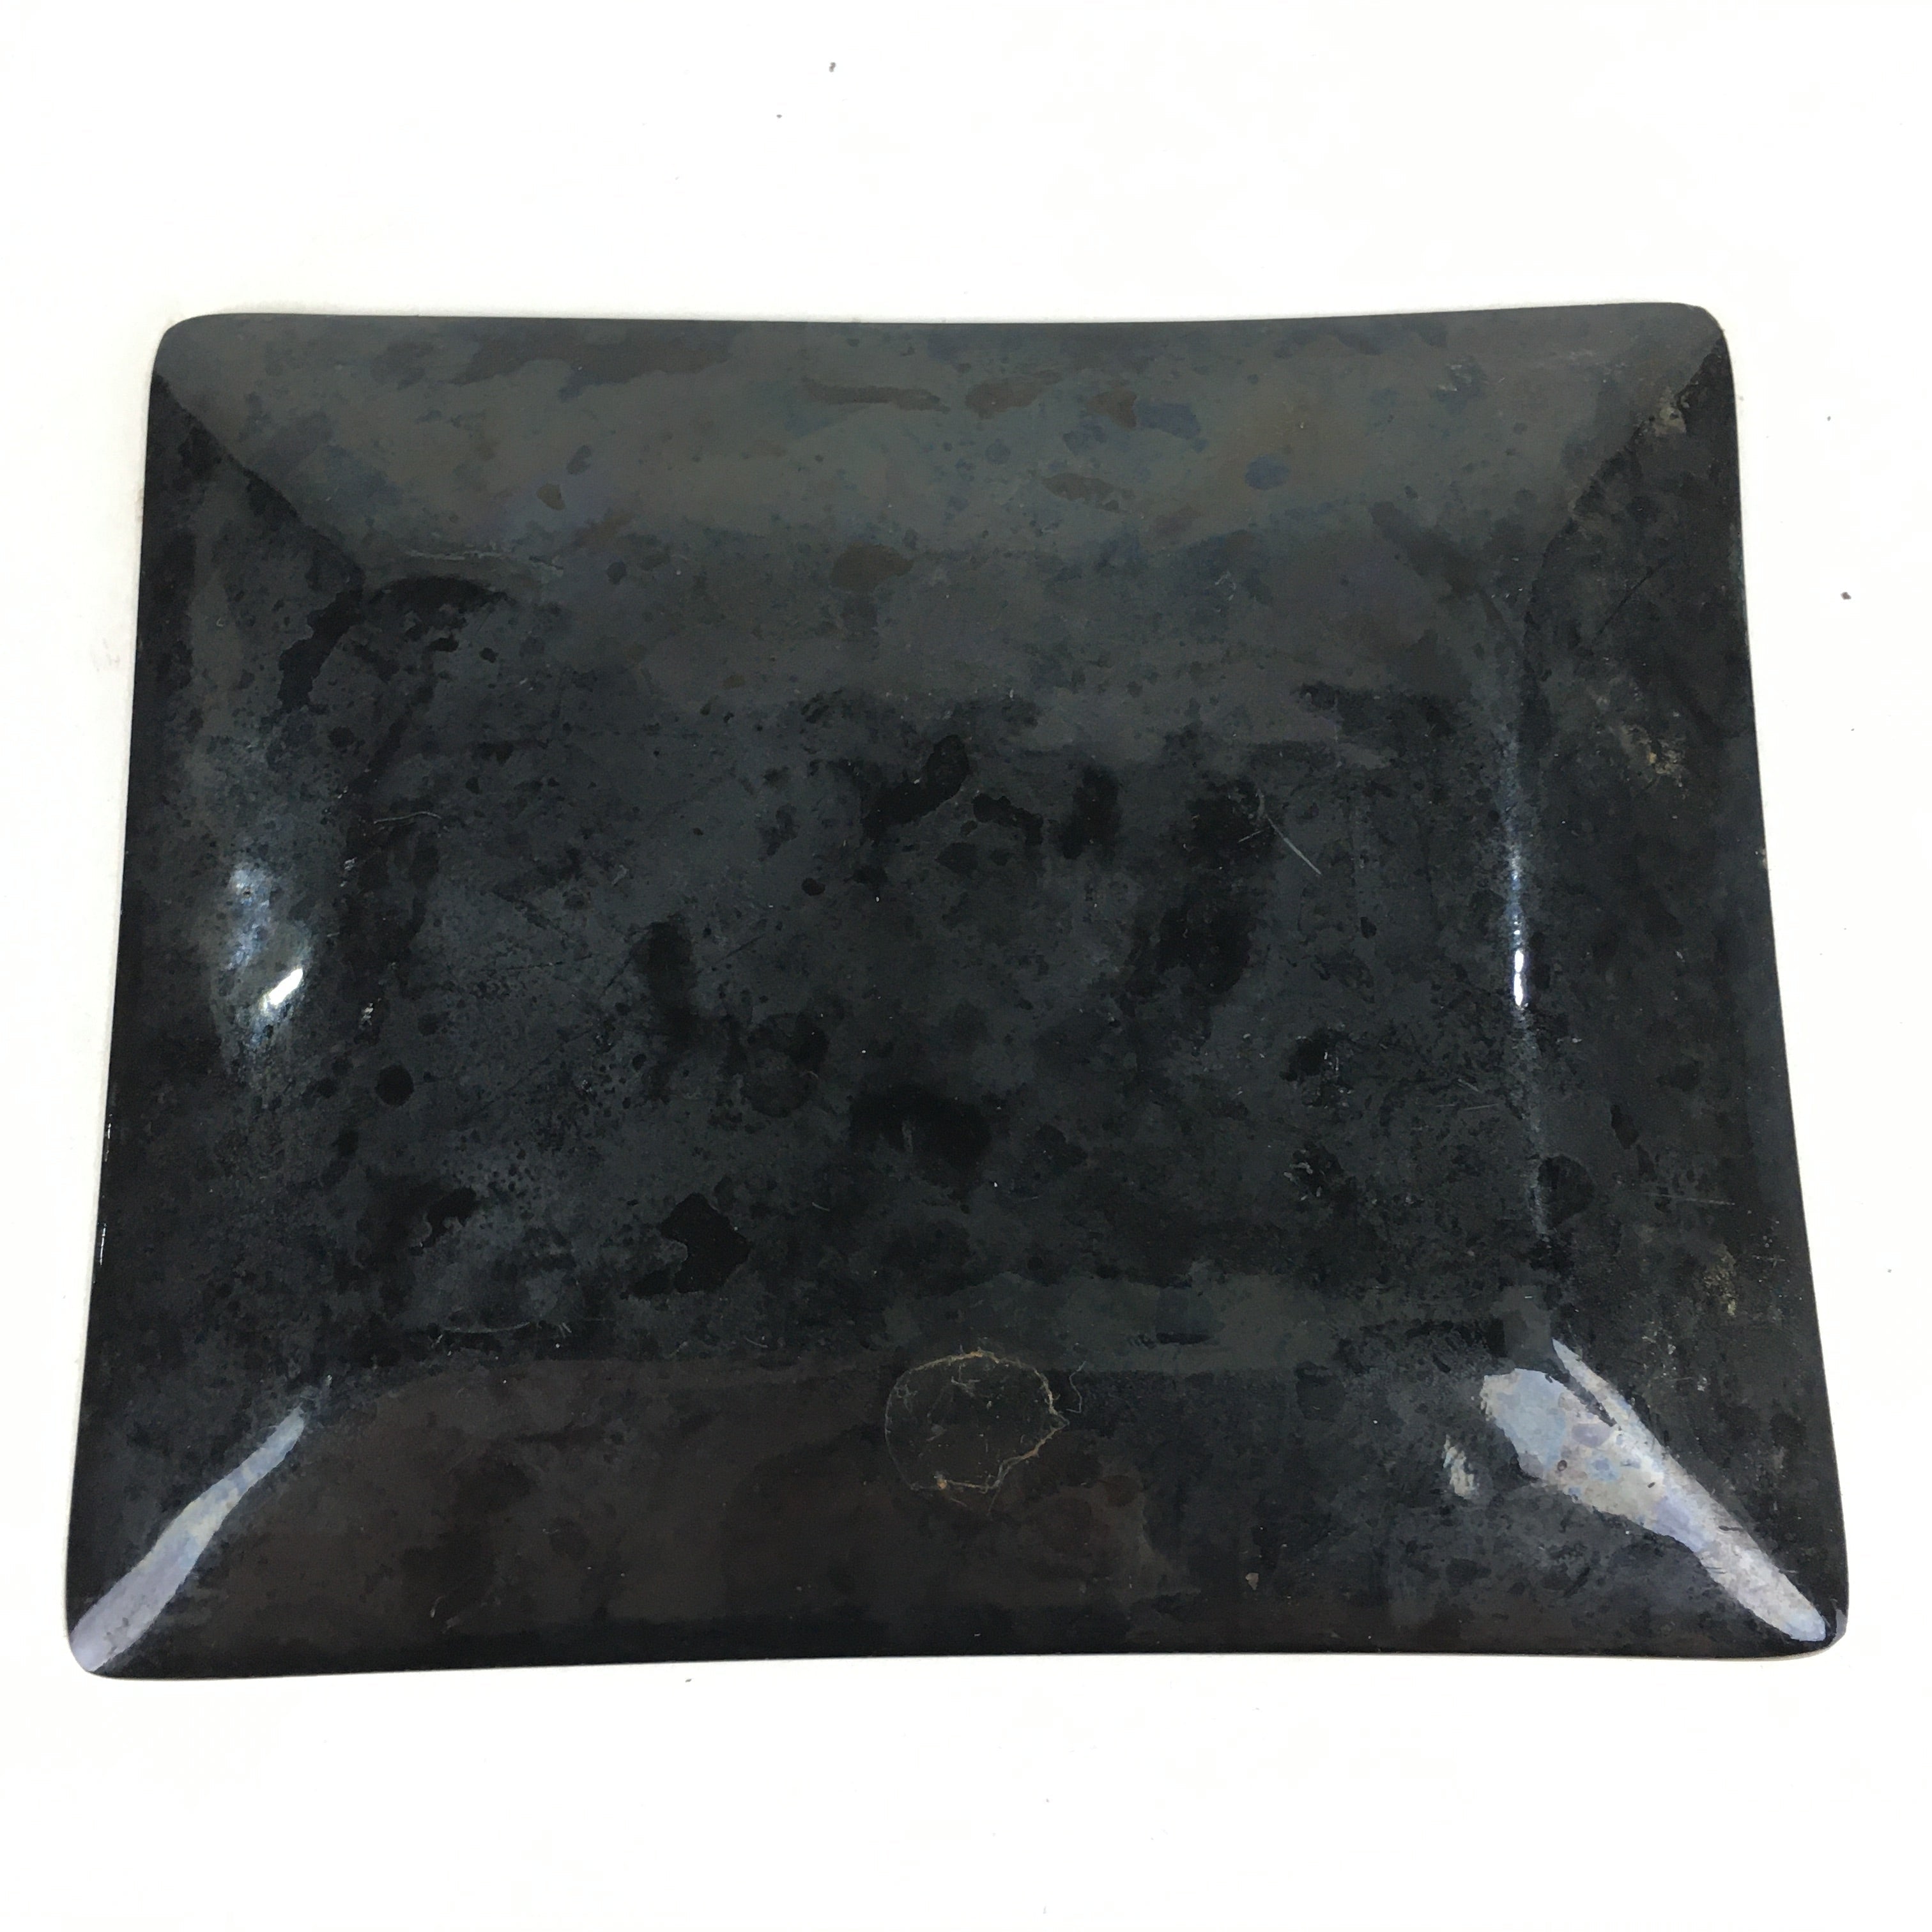 Japanese Cloisonné Ware Plate Vtg Kozara Green Enamel Finish Metal T85